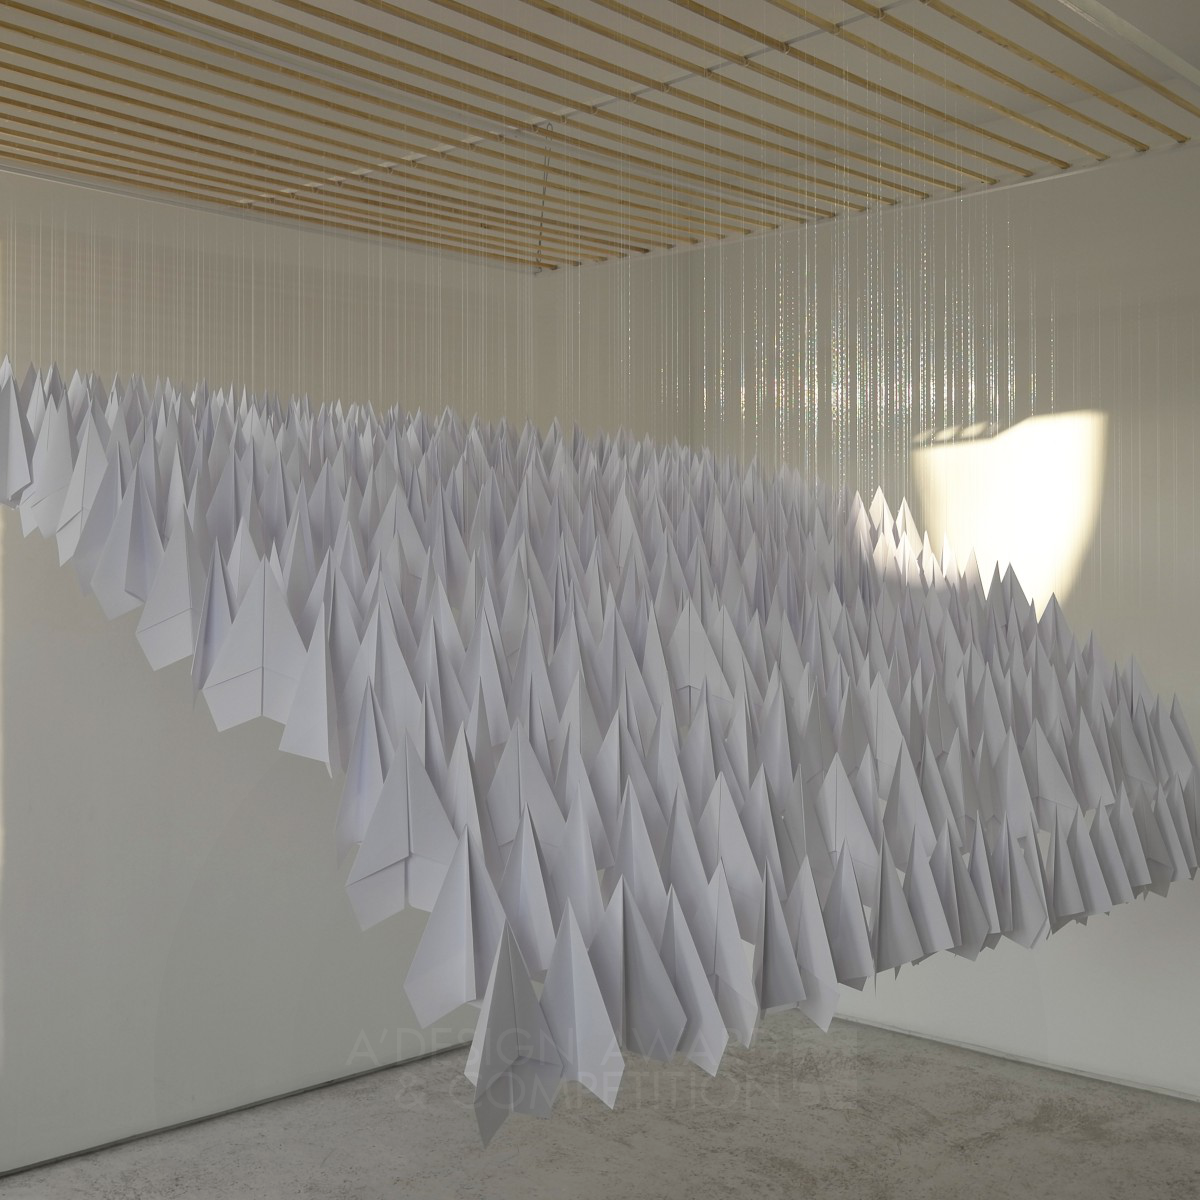 Rise Art installation by Maria Pedras